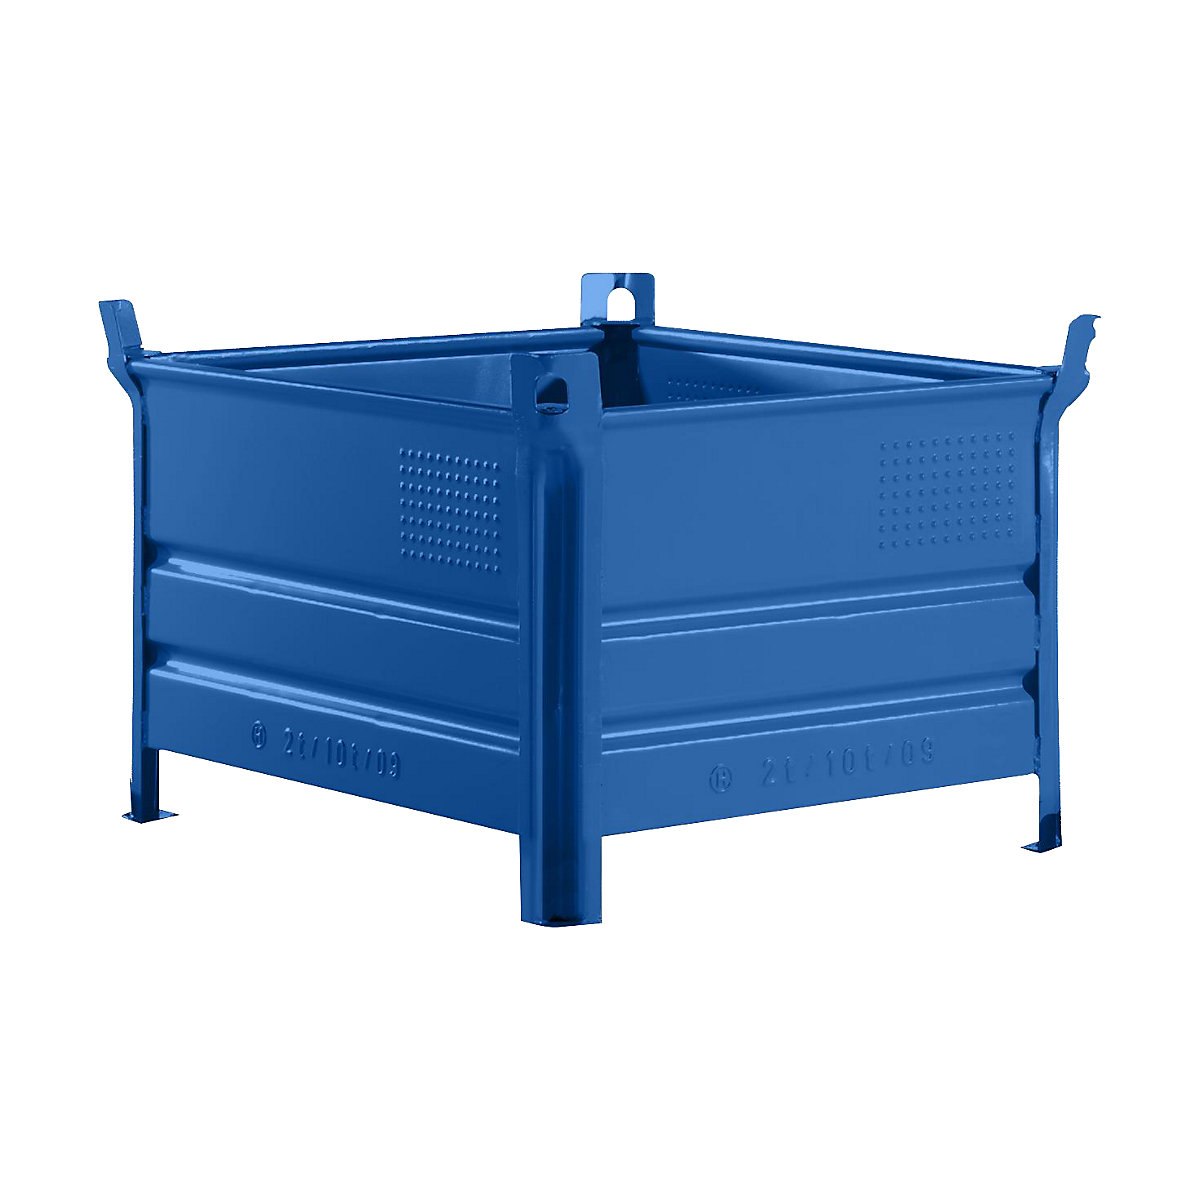 Vollwand-Stapelbehälter Heson, BxL 800 x 1000 mm, Traglast 1000 kg, blau, ab 1 Stk-8